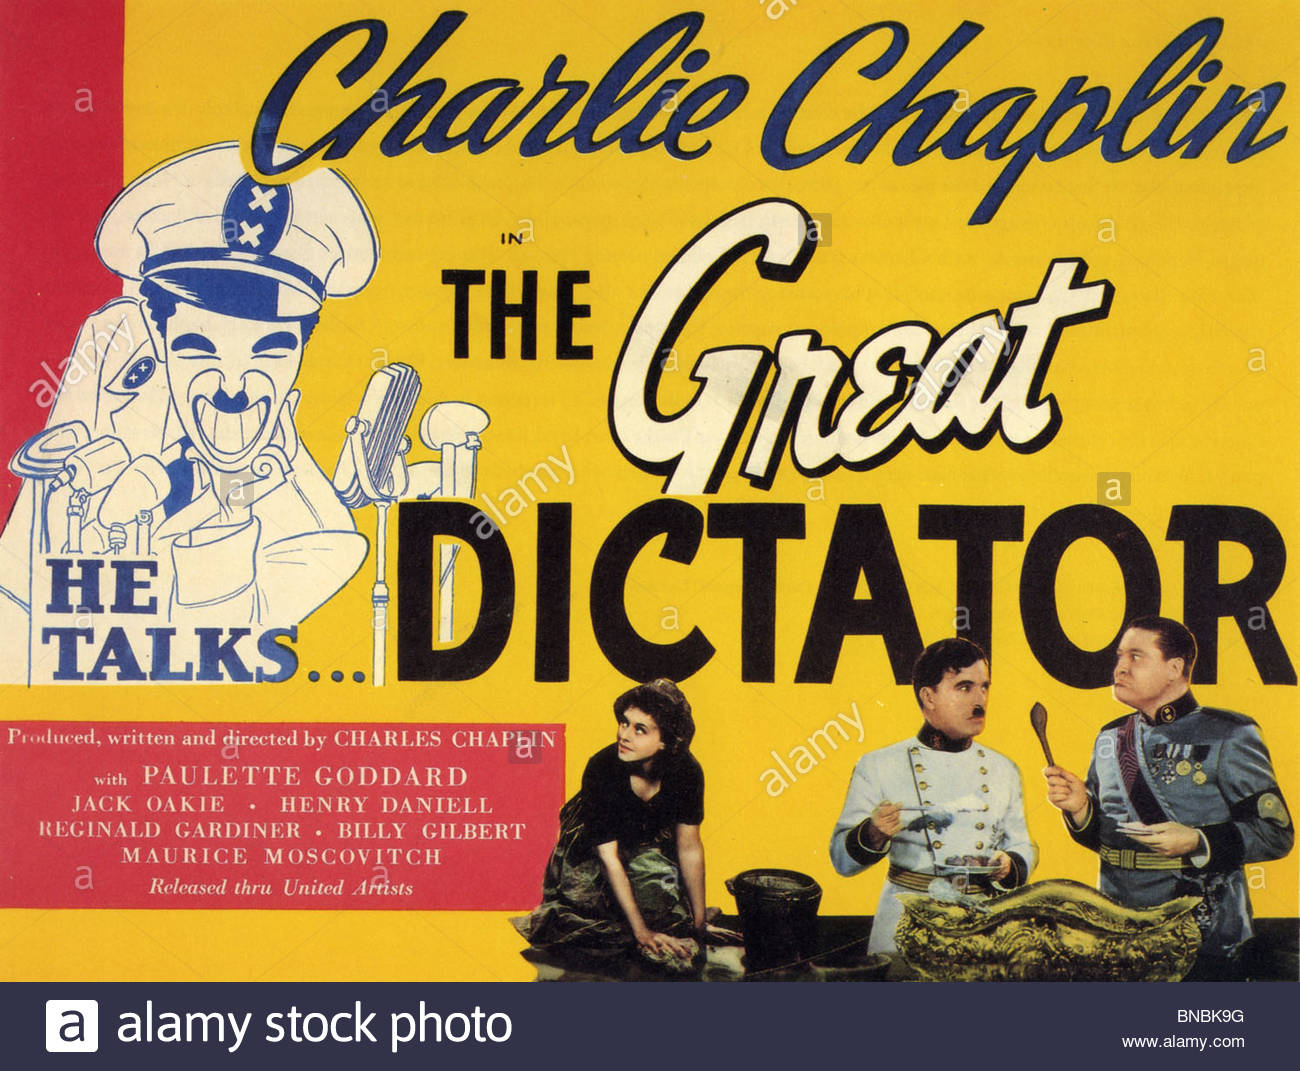 The Great Dictator HD wallpapers, Desktop wallpaper - most viewed